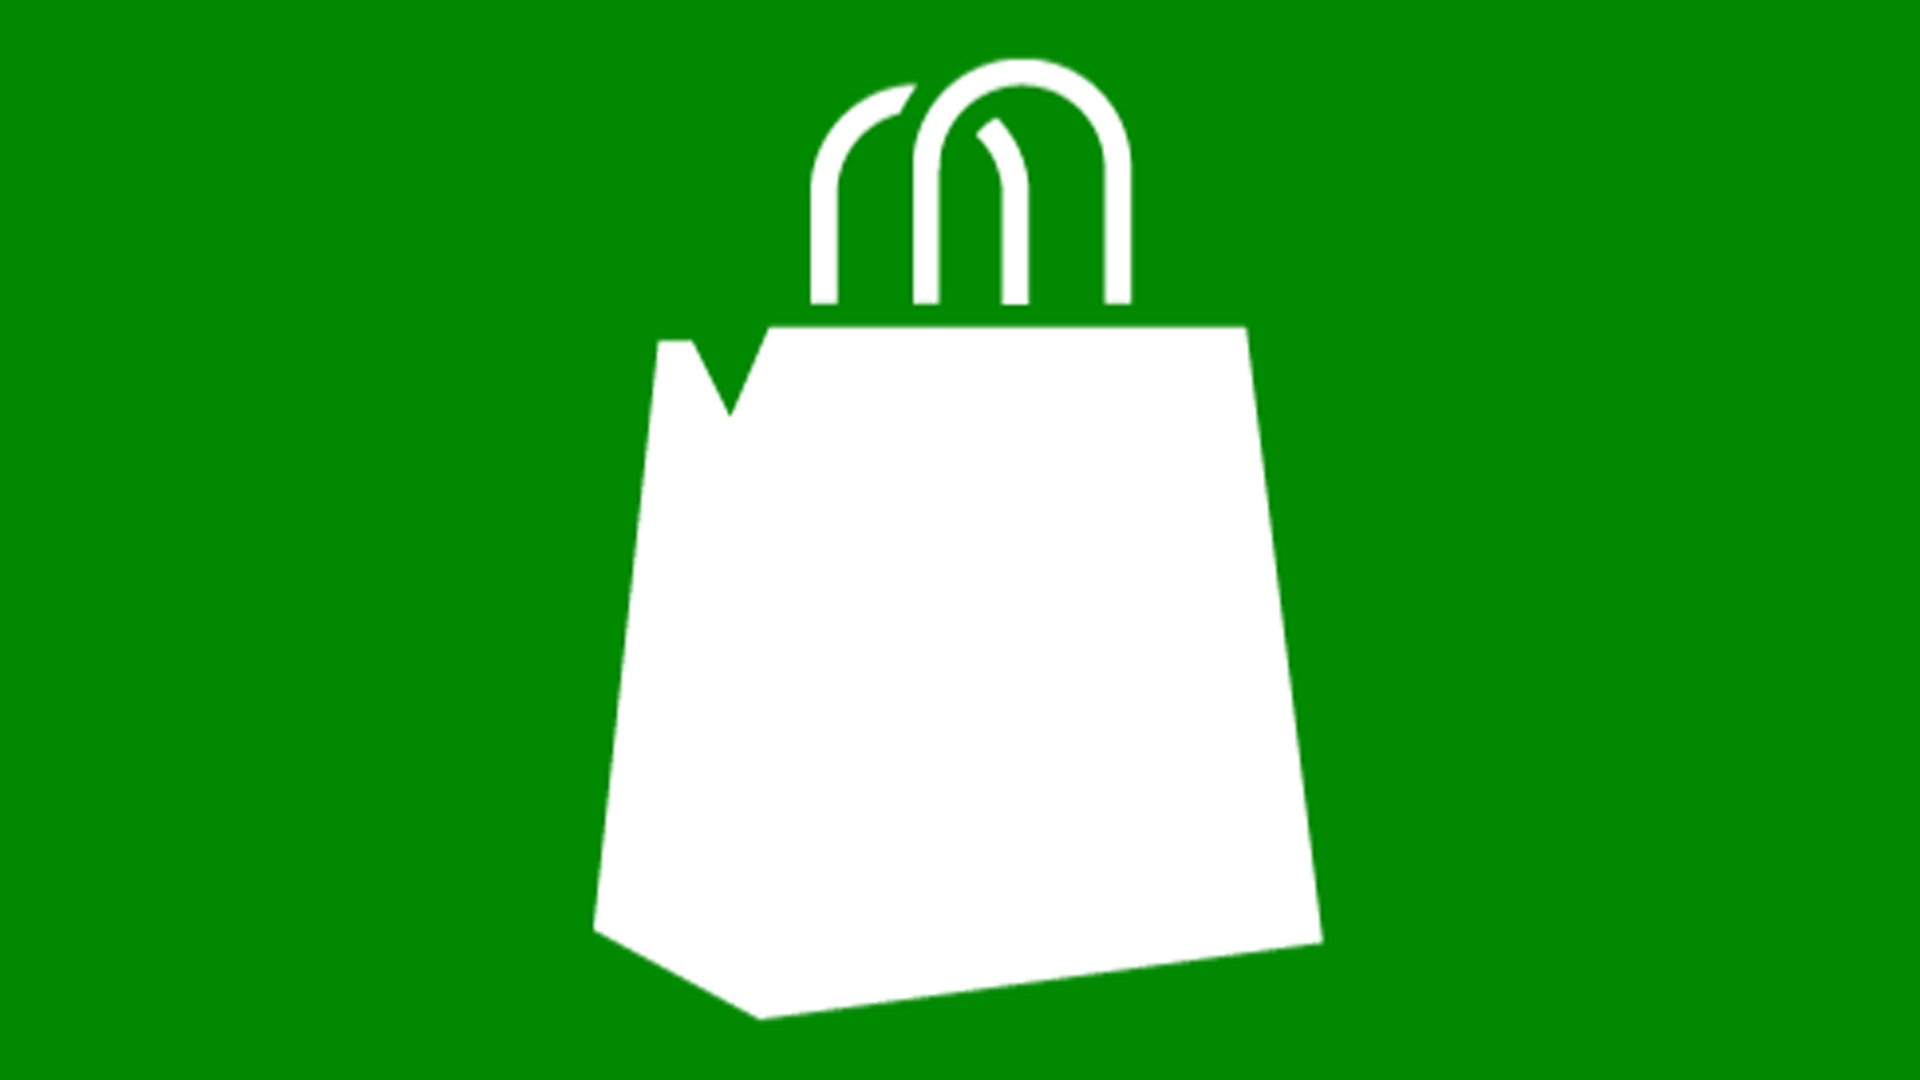 Windows 8 Metro App Marketplace Hands On